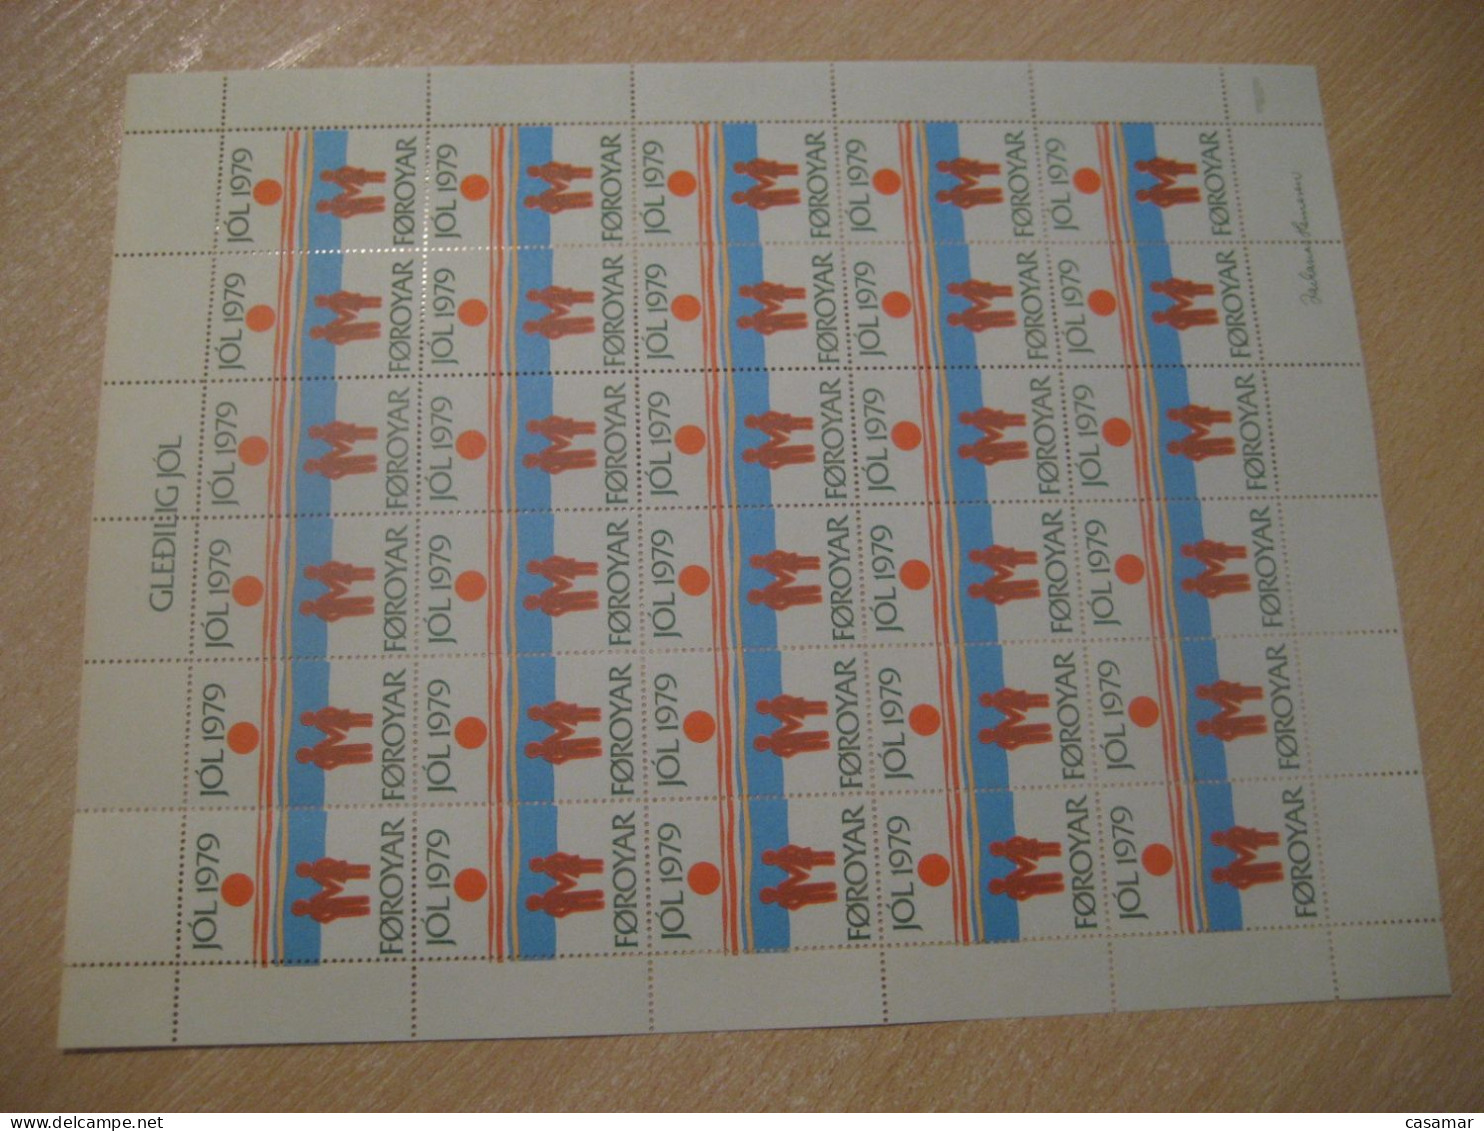 FAROE ISLANDS 1979 Sun Merry Christmas Sheet Bloc 30 Poster Stamp Vignette DENMARK Label - Faeroër